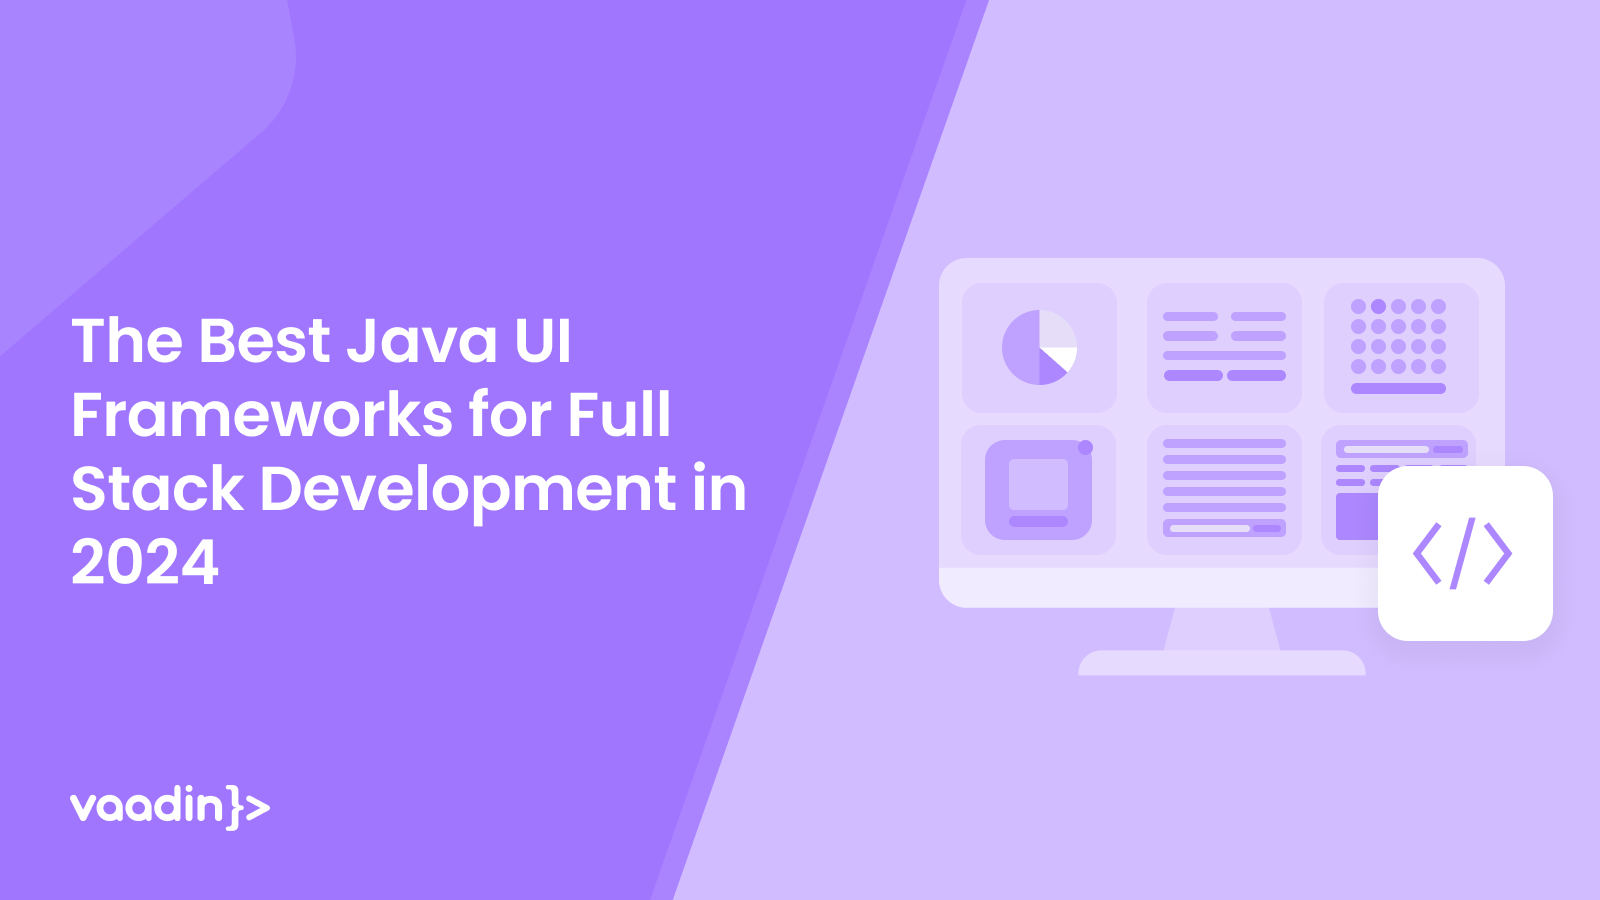 Top fullstack Java UI framworks 2024 